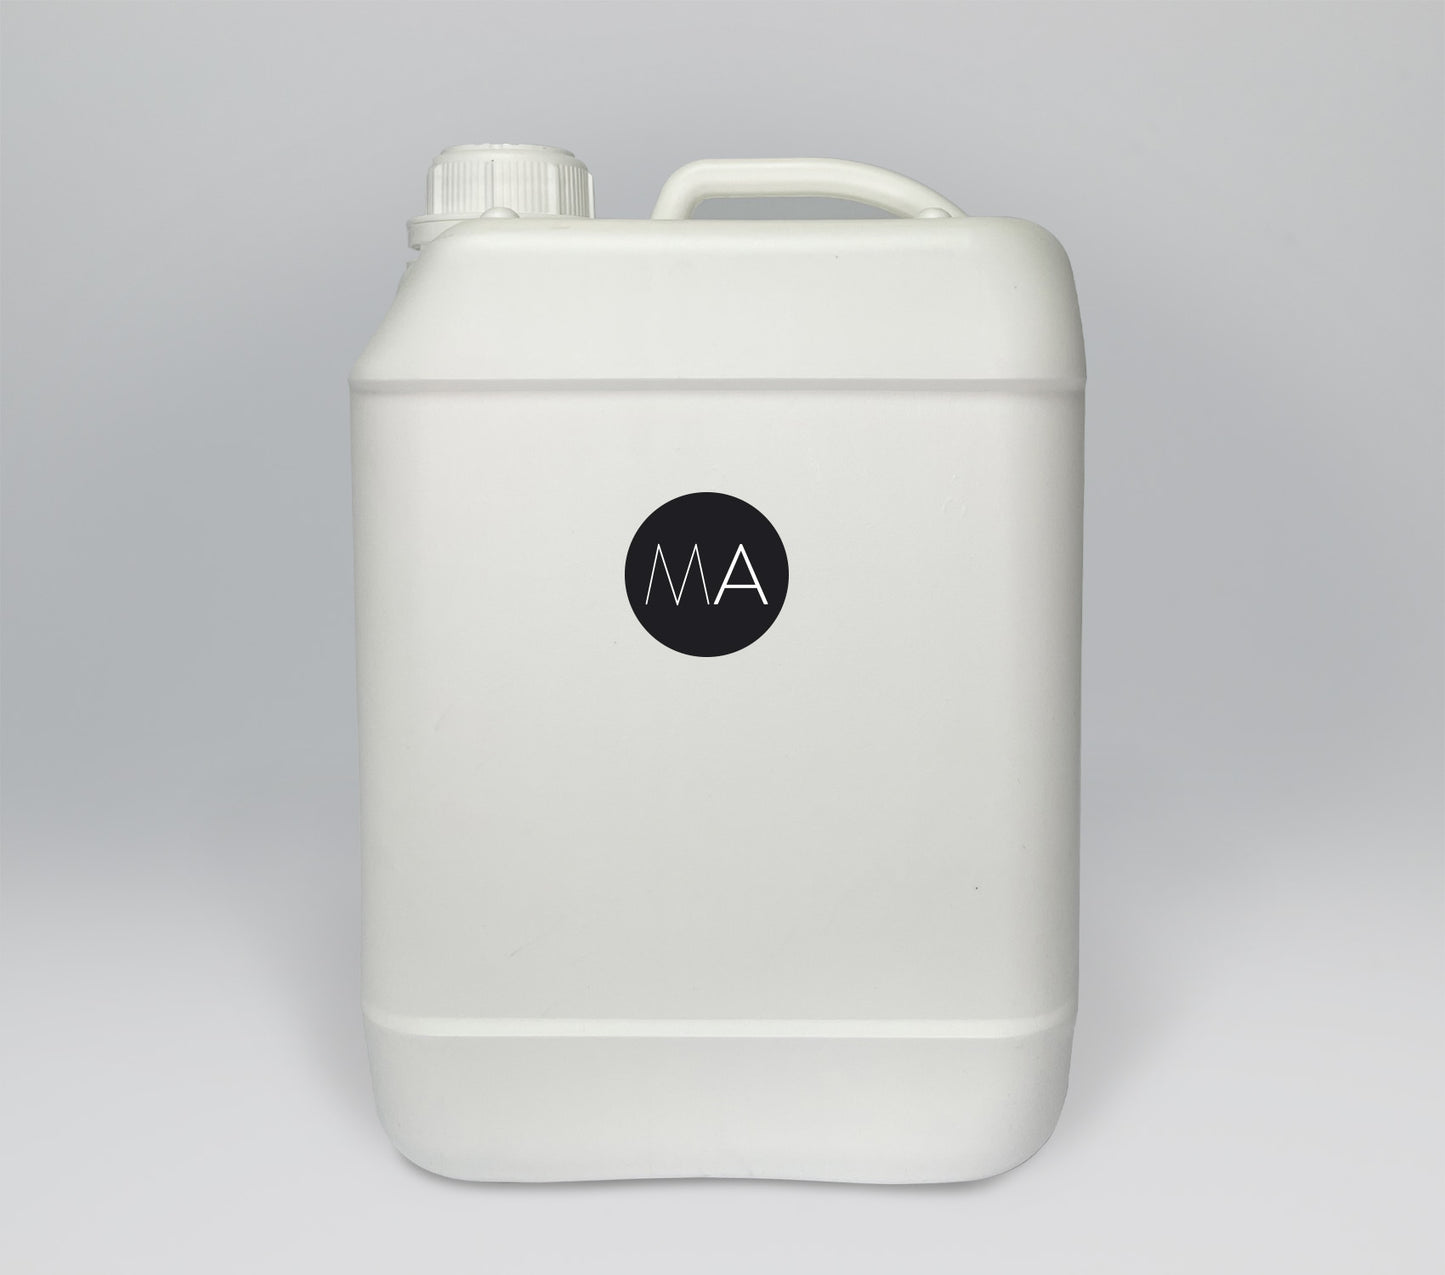 Neutralizador de olores - Spray - Meditaroma – MEDITAROMA SL